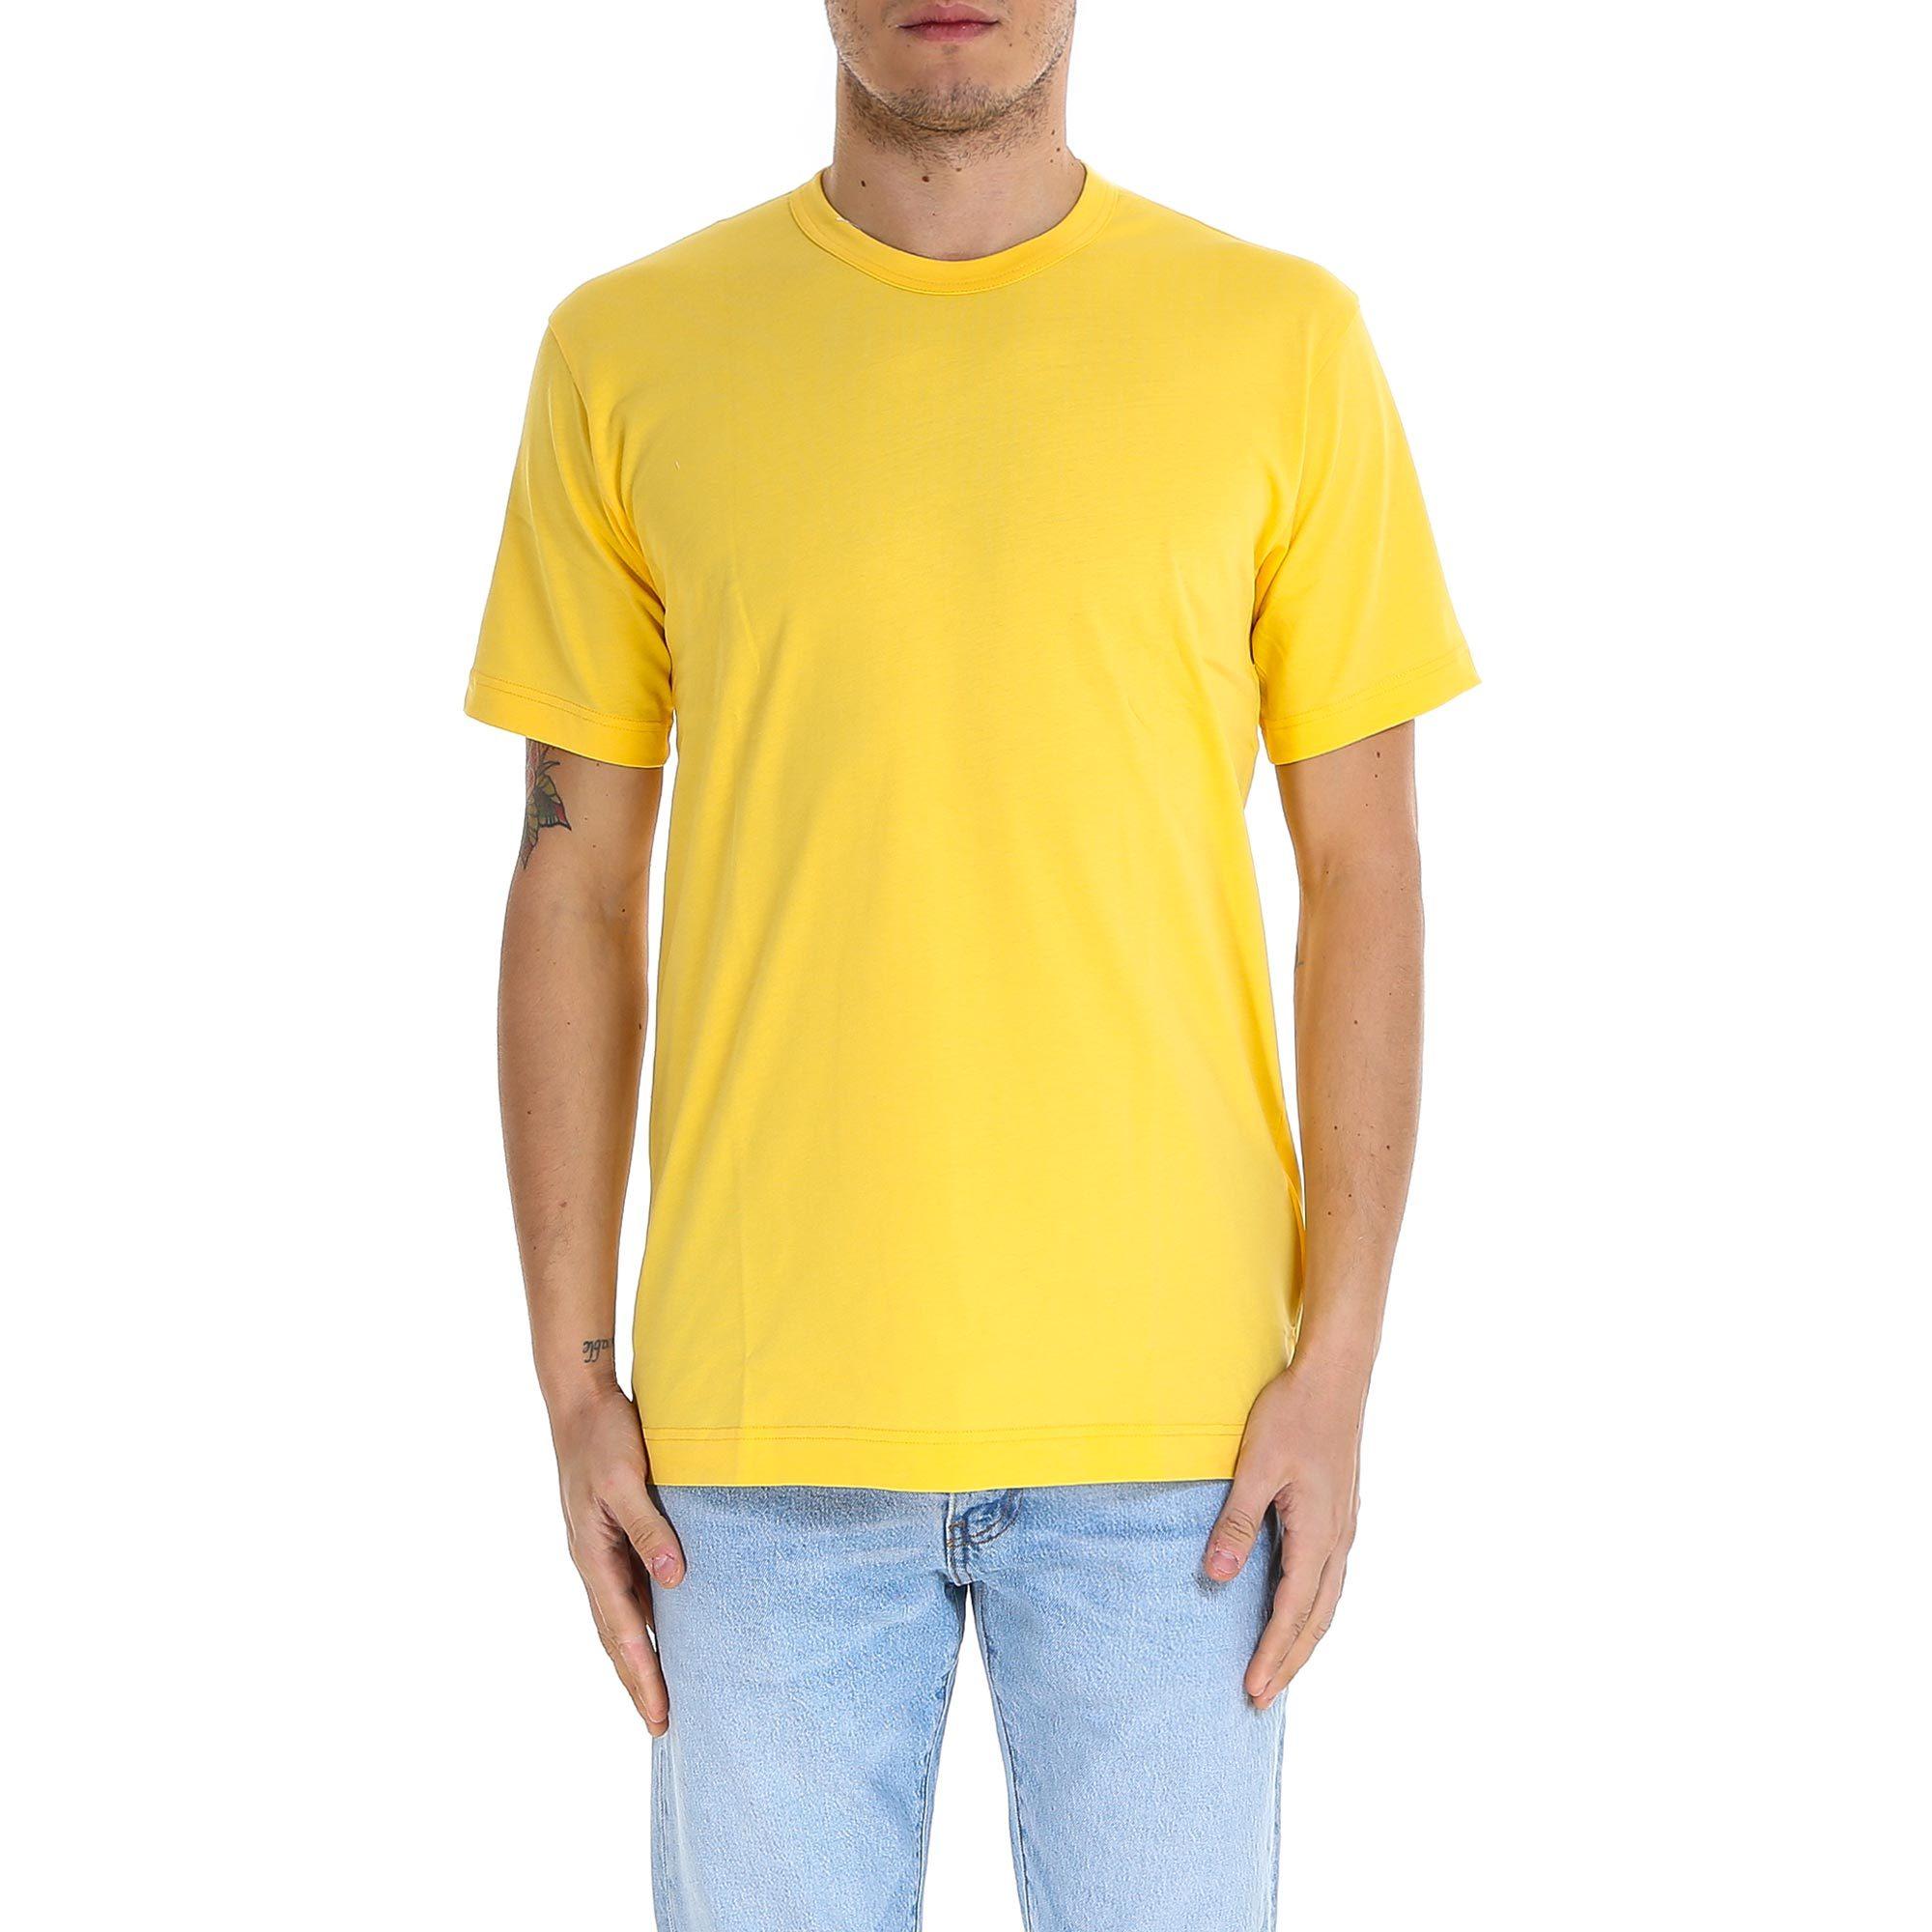 Comme des Garçons Boys Logo T-shirt in Yellow for Men - Lyst